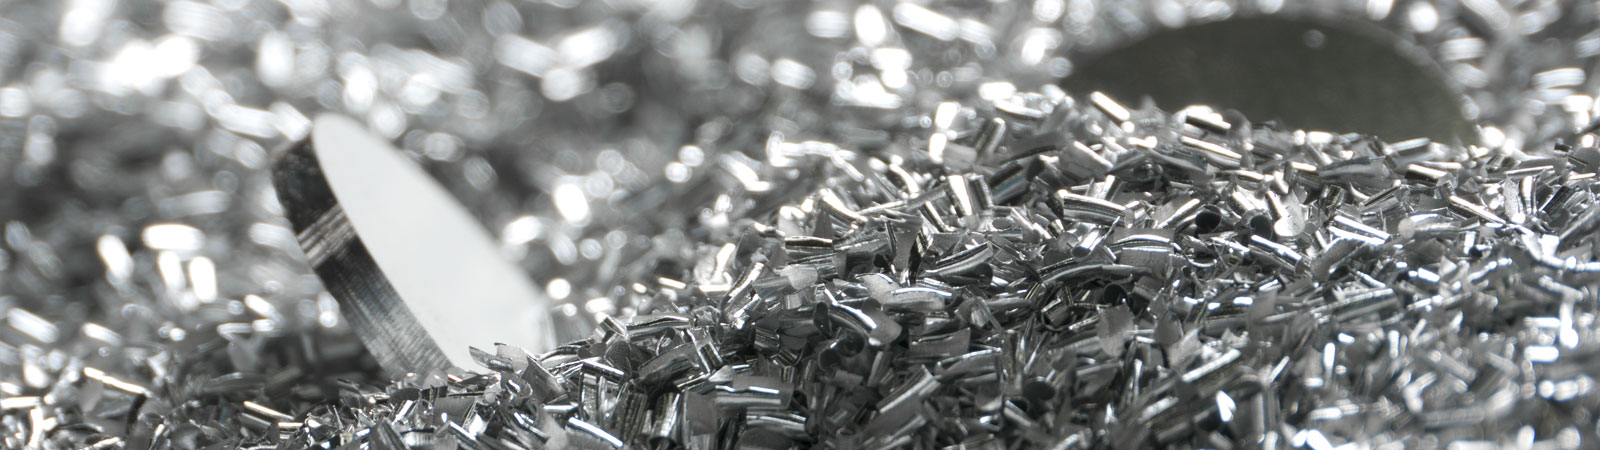 Aluminiumrecycling